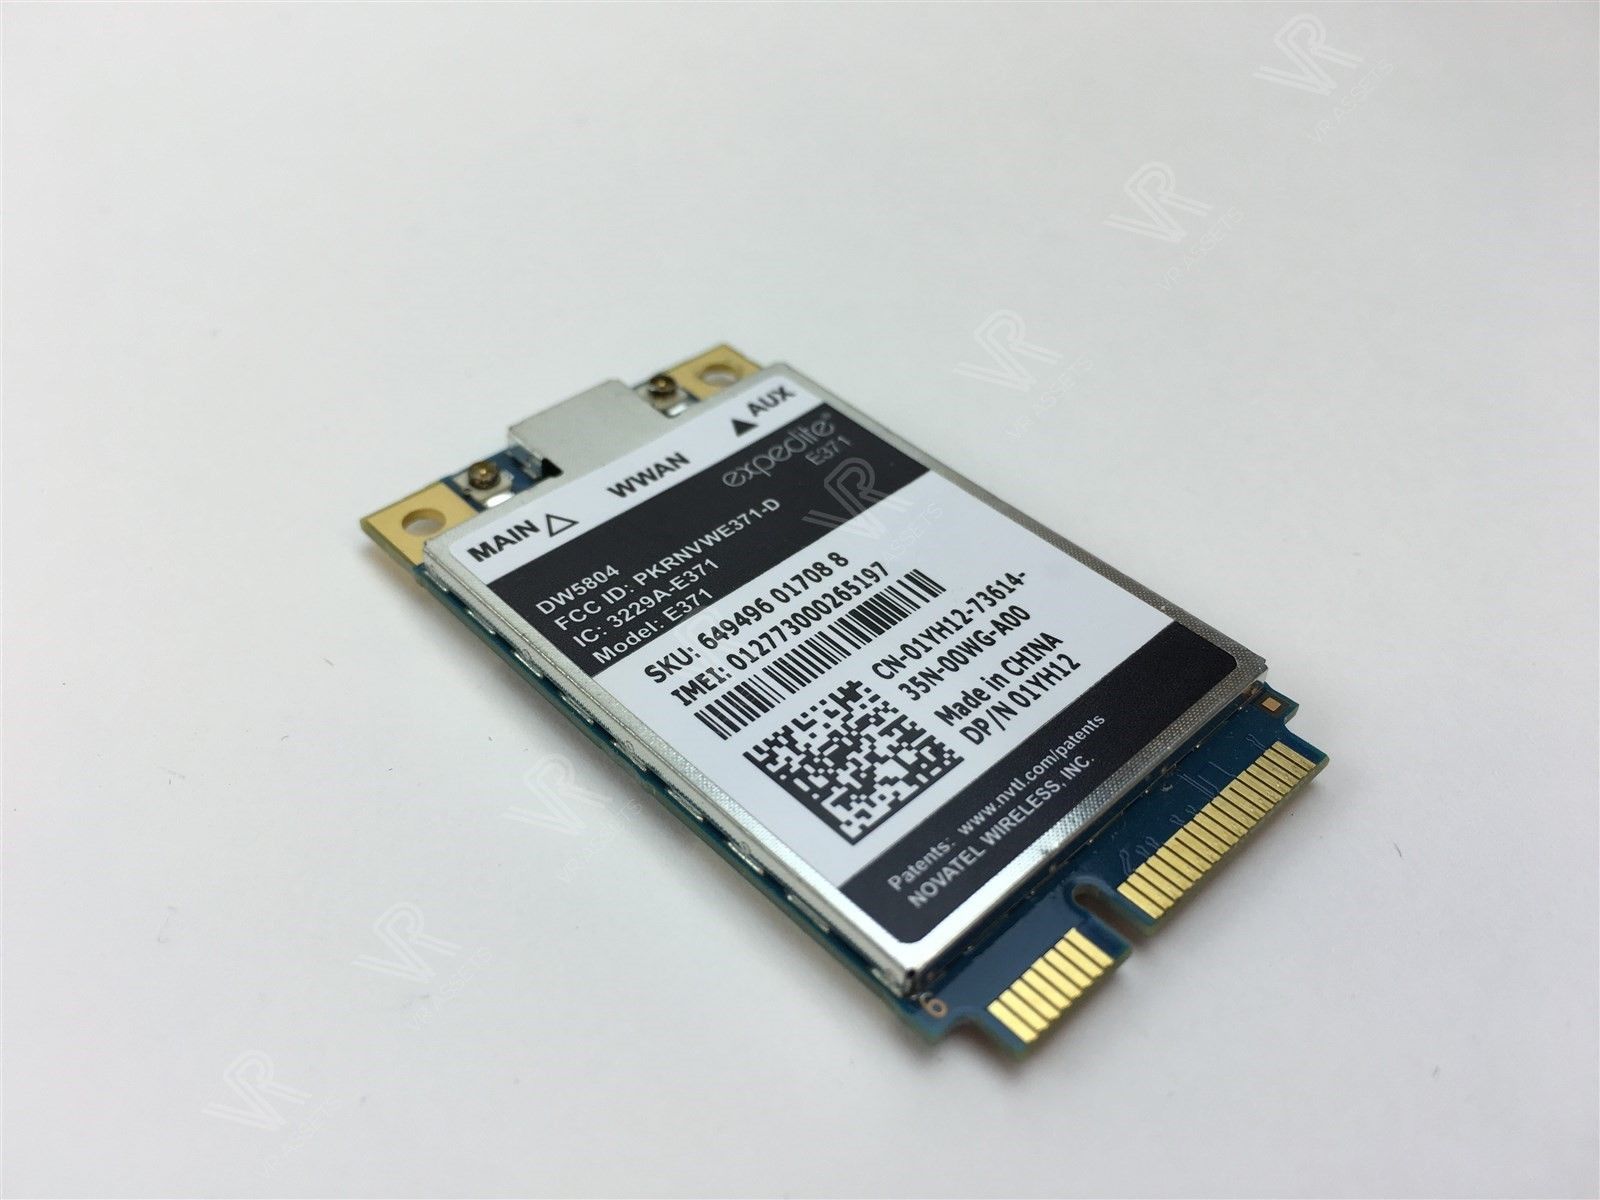 Dell Novatel Expedite E371 PCI Express Mini Card 3G/4G LTE 700MHz 1YH12 01YH12